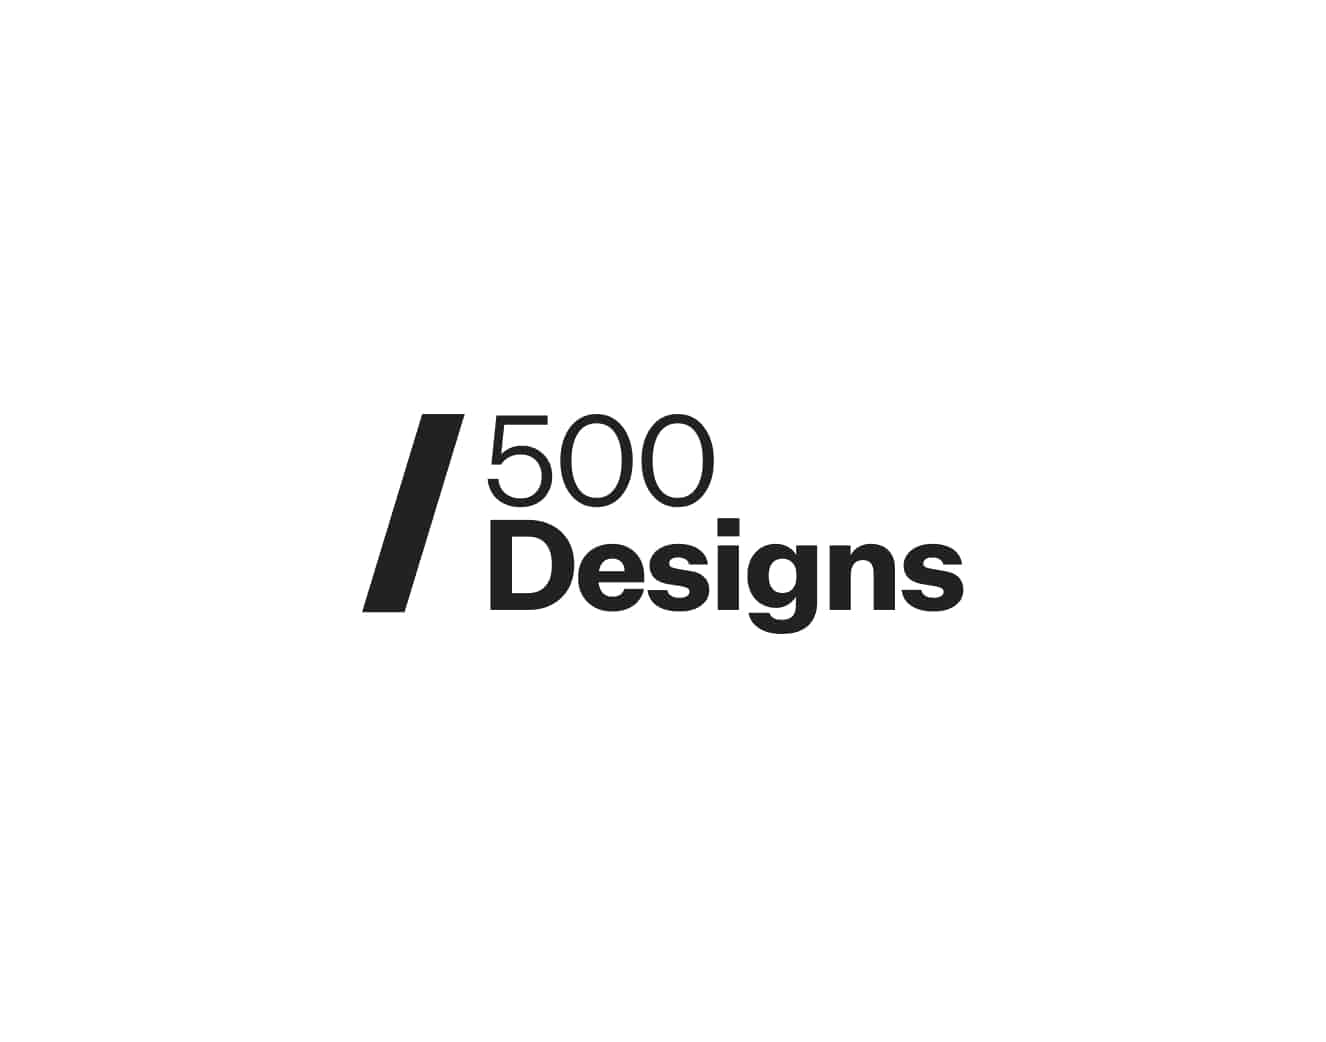 500 Designs logo